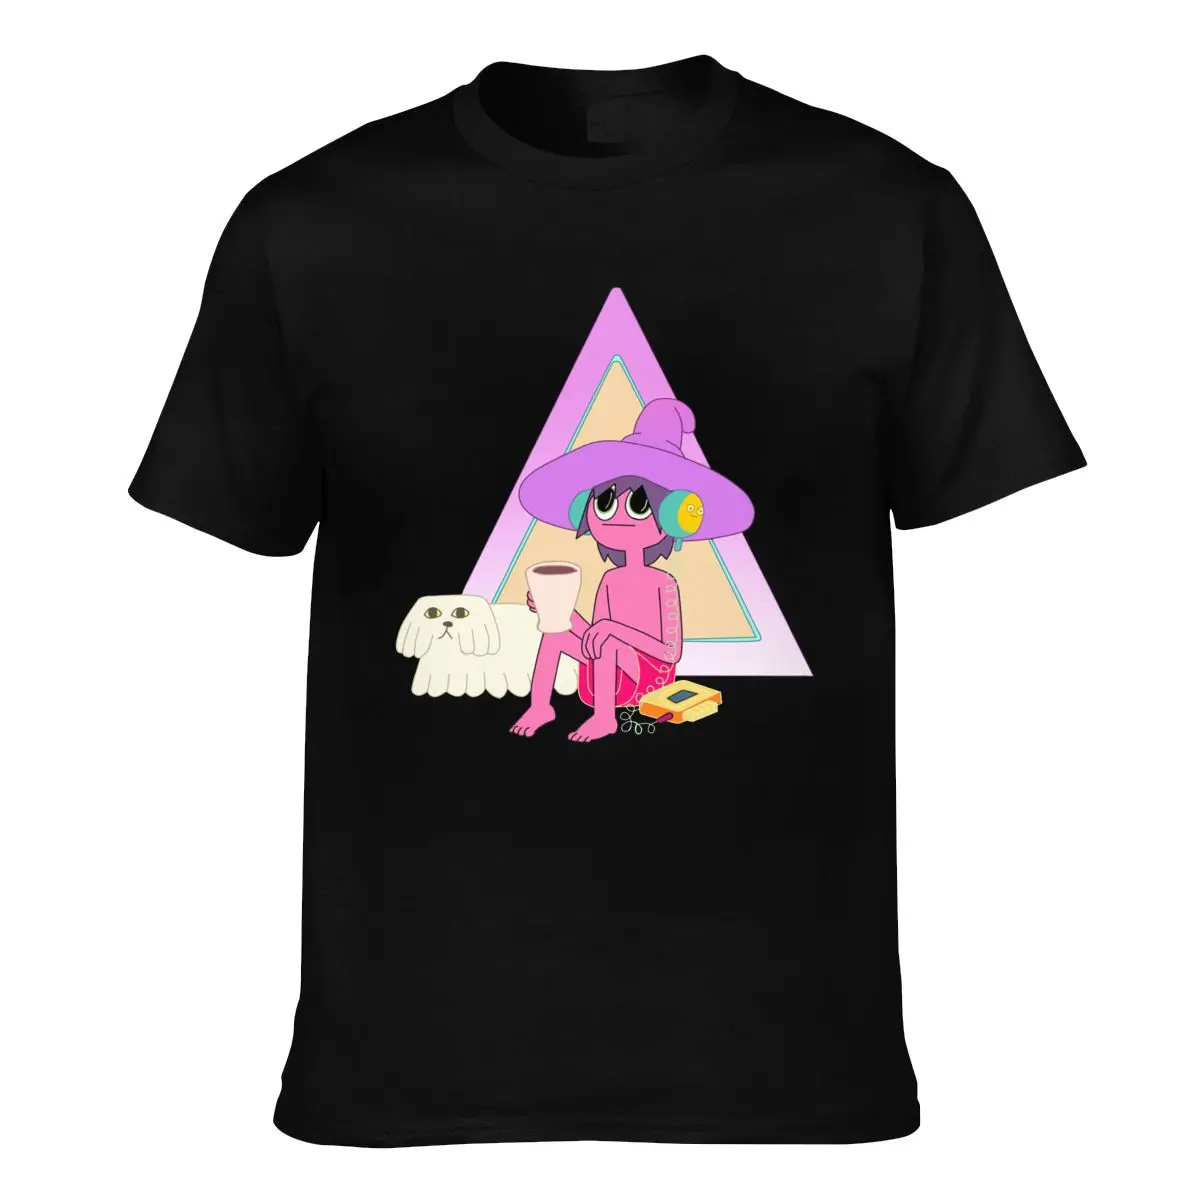 

Clancy The Midnight Gospel T Shirt trussell vibing sapce drugs artsy Cool T-Shirt Crew Neck Tee Shirt Casual Tees Male 4XL 5XL